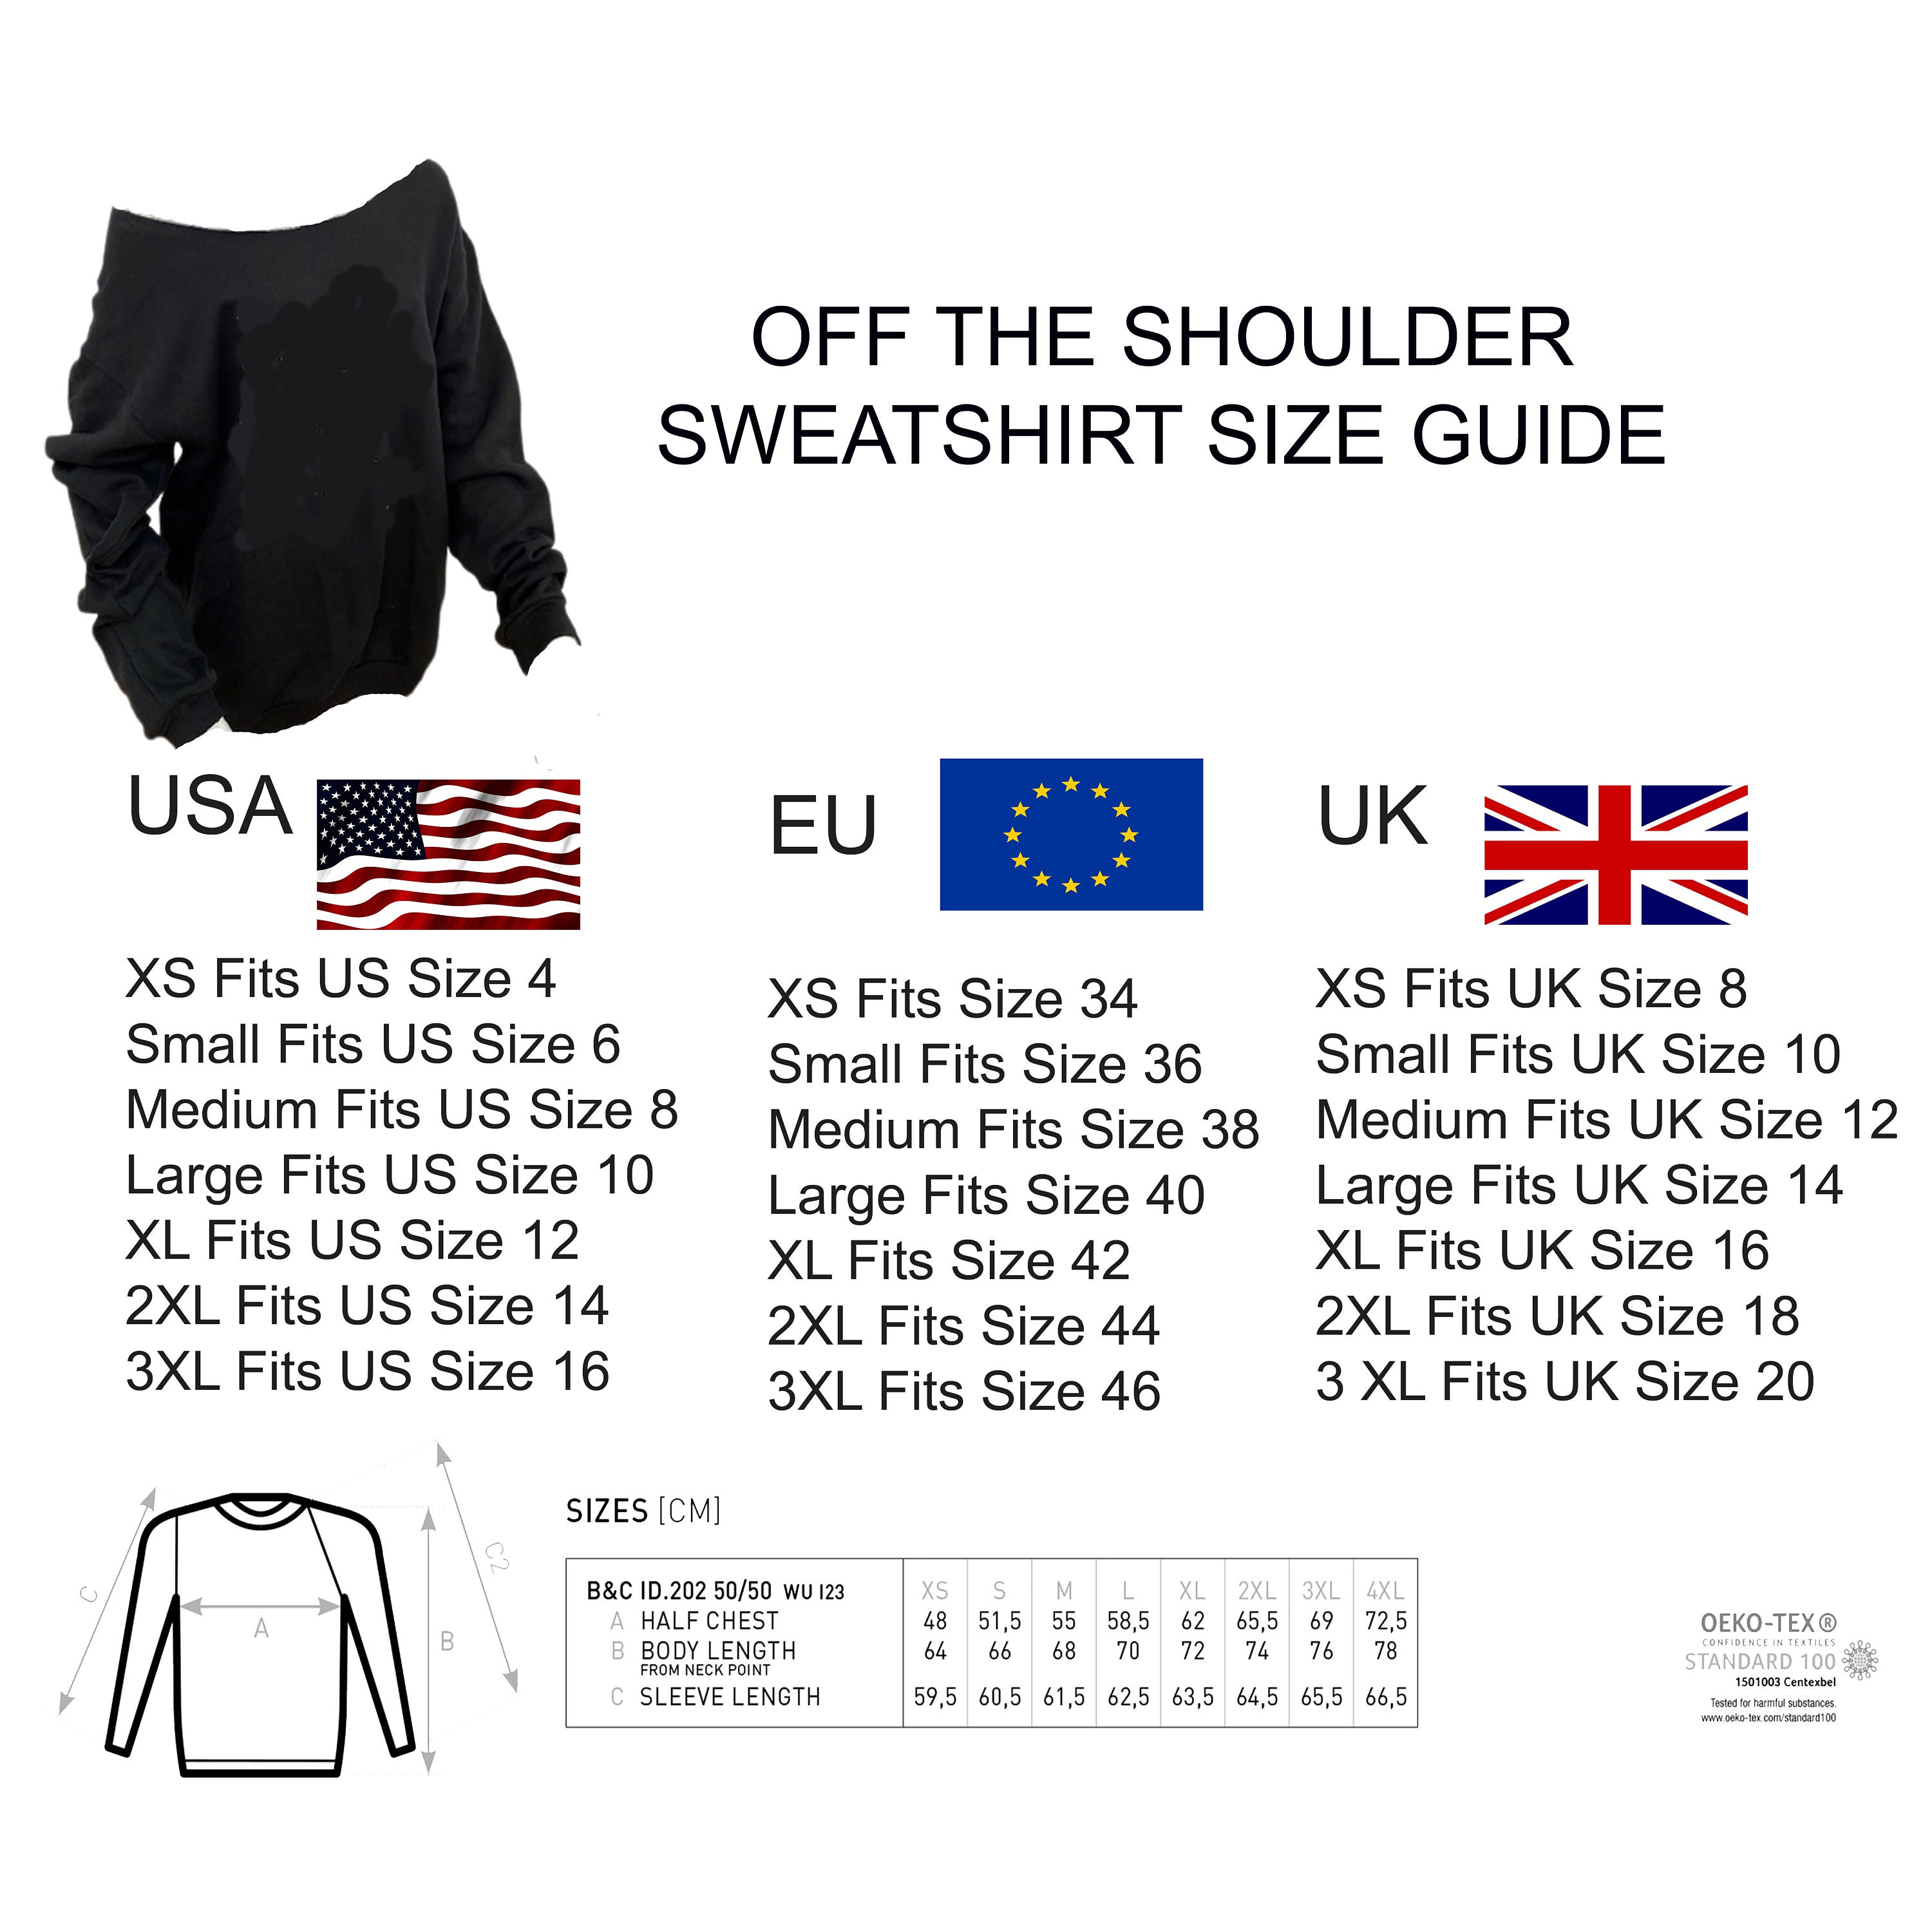 Off the Shoulder Sweatshirt, Slouchy Sweatshirt, XS to 3XL 